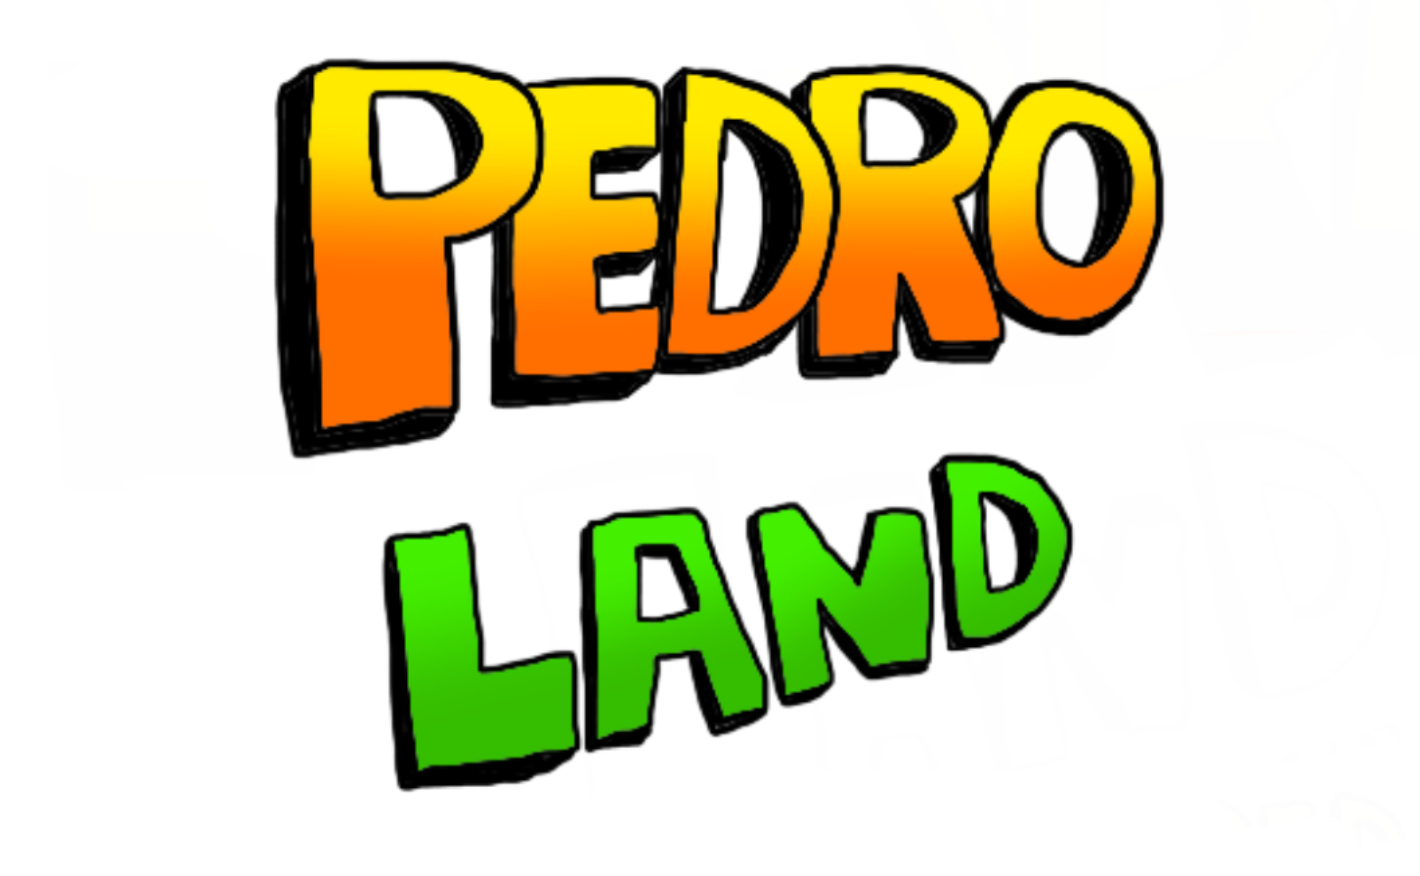 Pedro Land